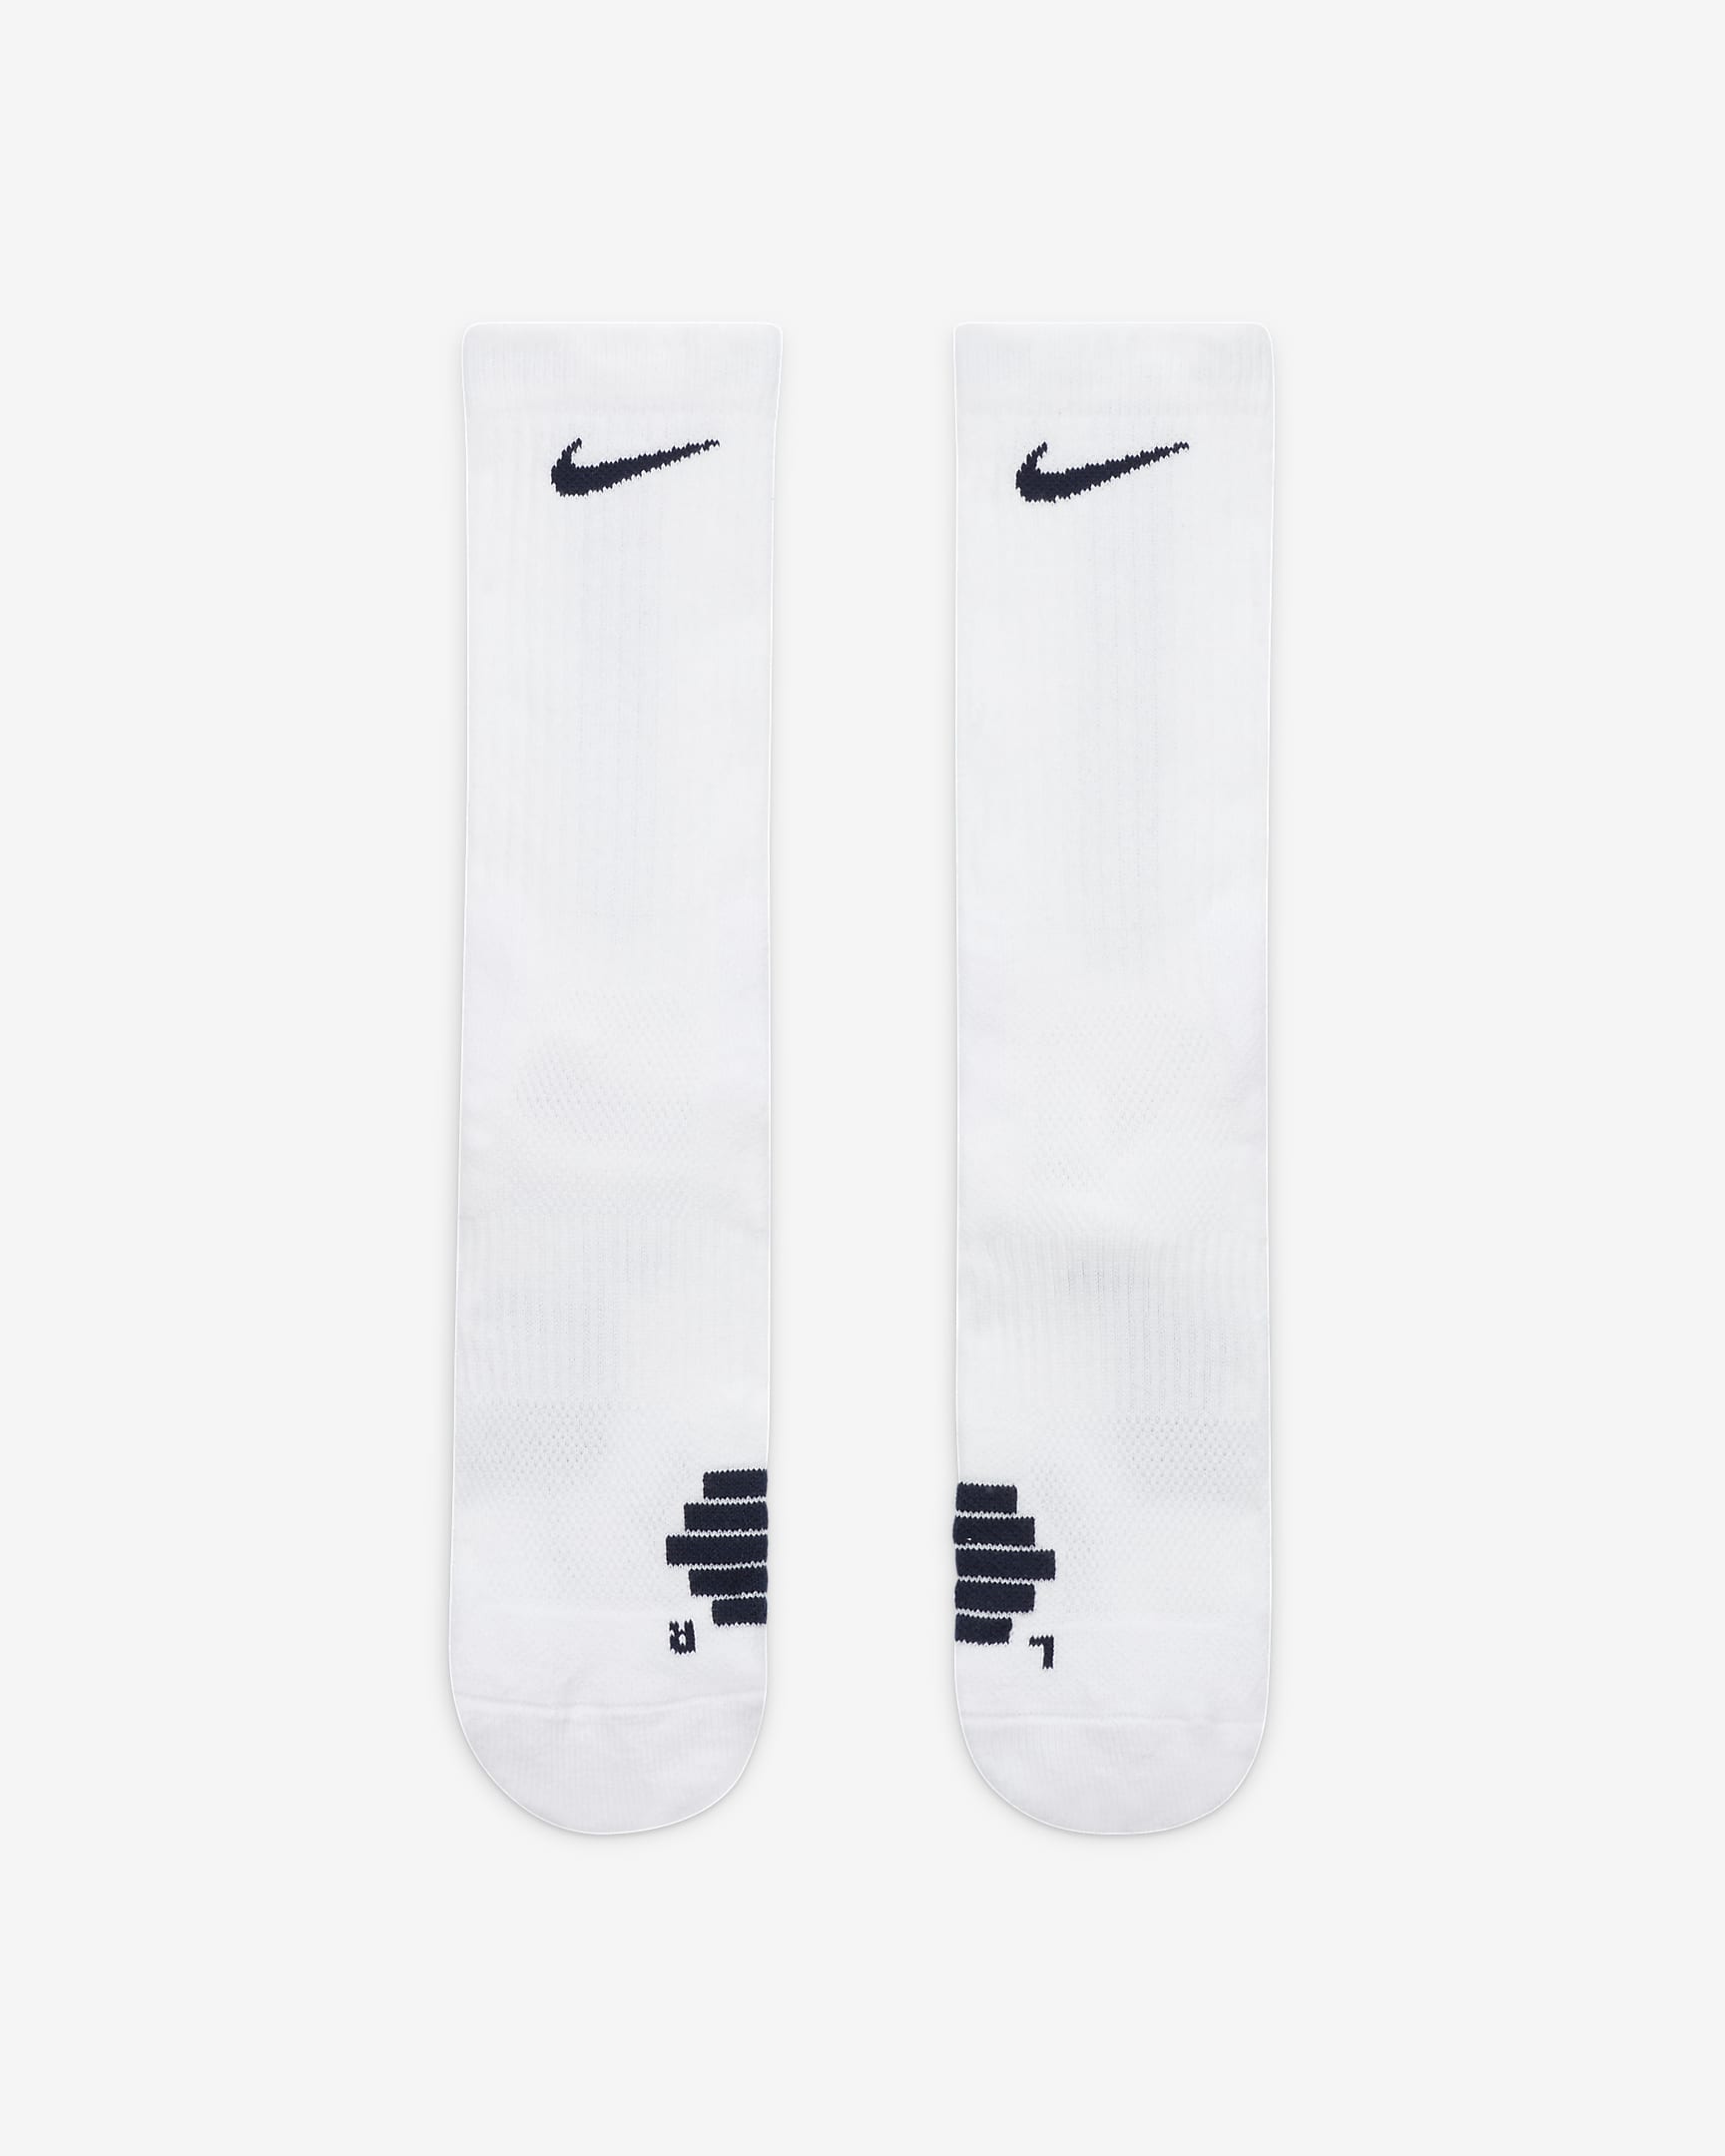 Nike Elite Crew Basketball Socks - White/College Navy/College Navy